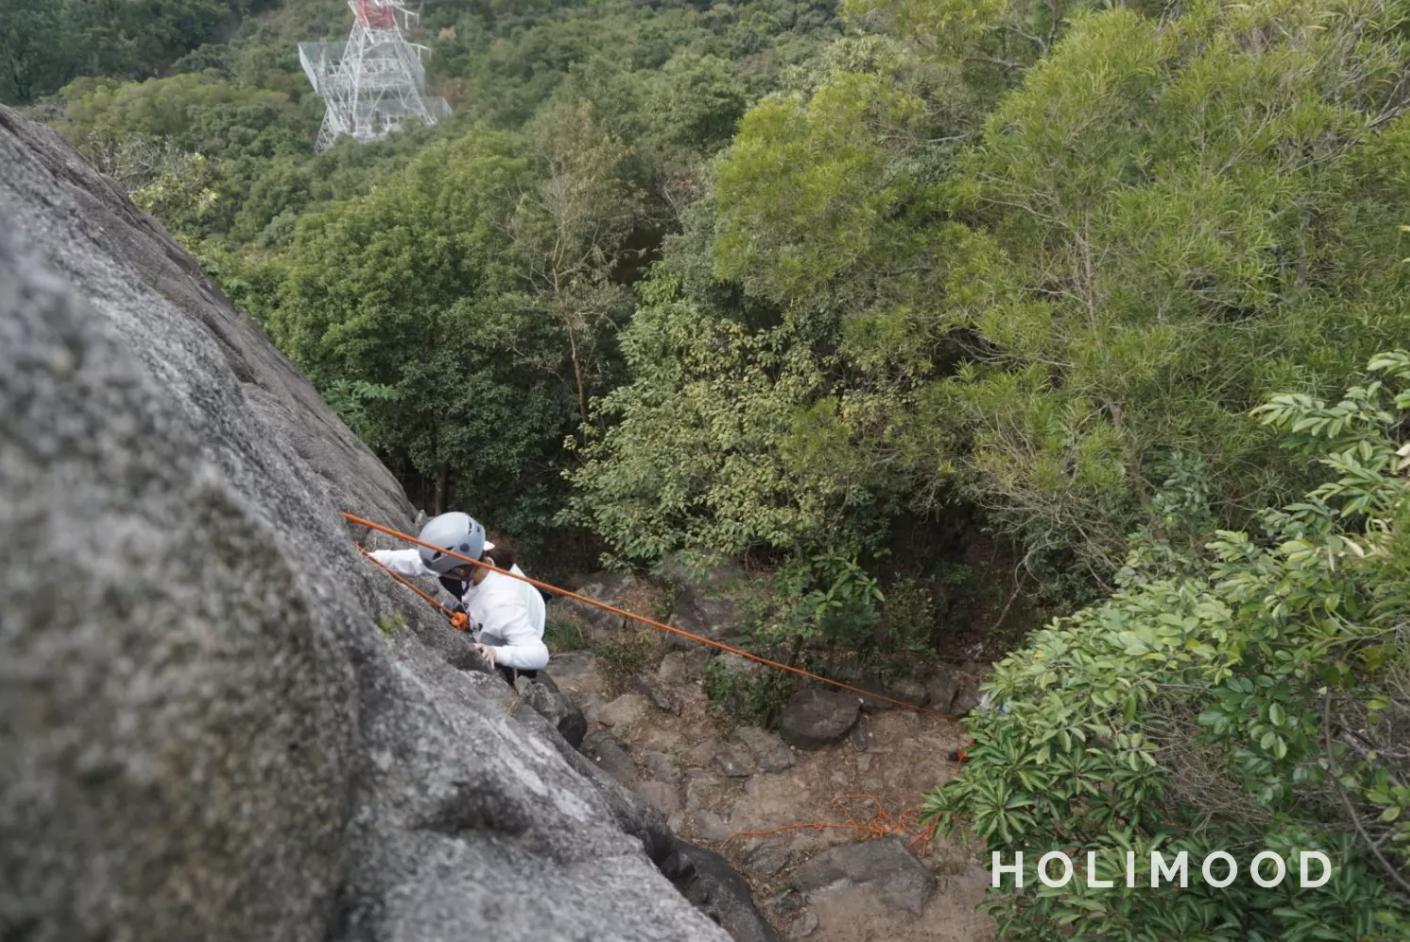 Explorer Hong Kong 【Aquila Crag】Rock Climbing and Abseiling Experience - Charter (min. 10 pax) 4